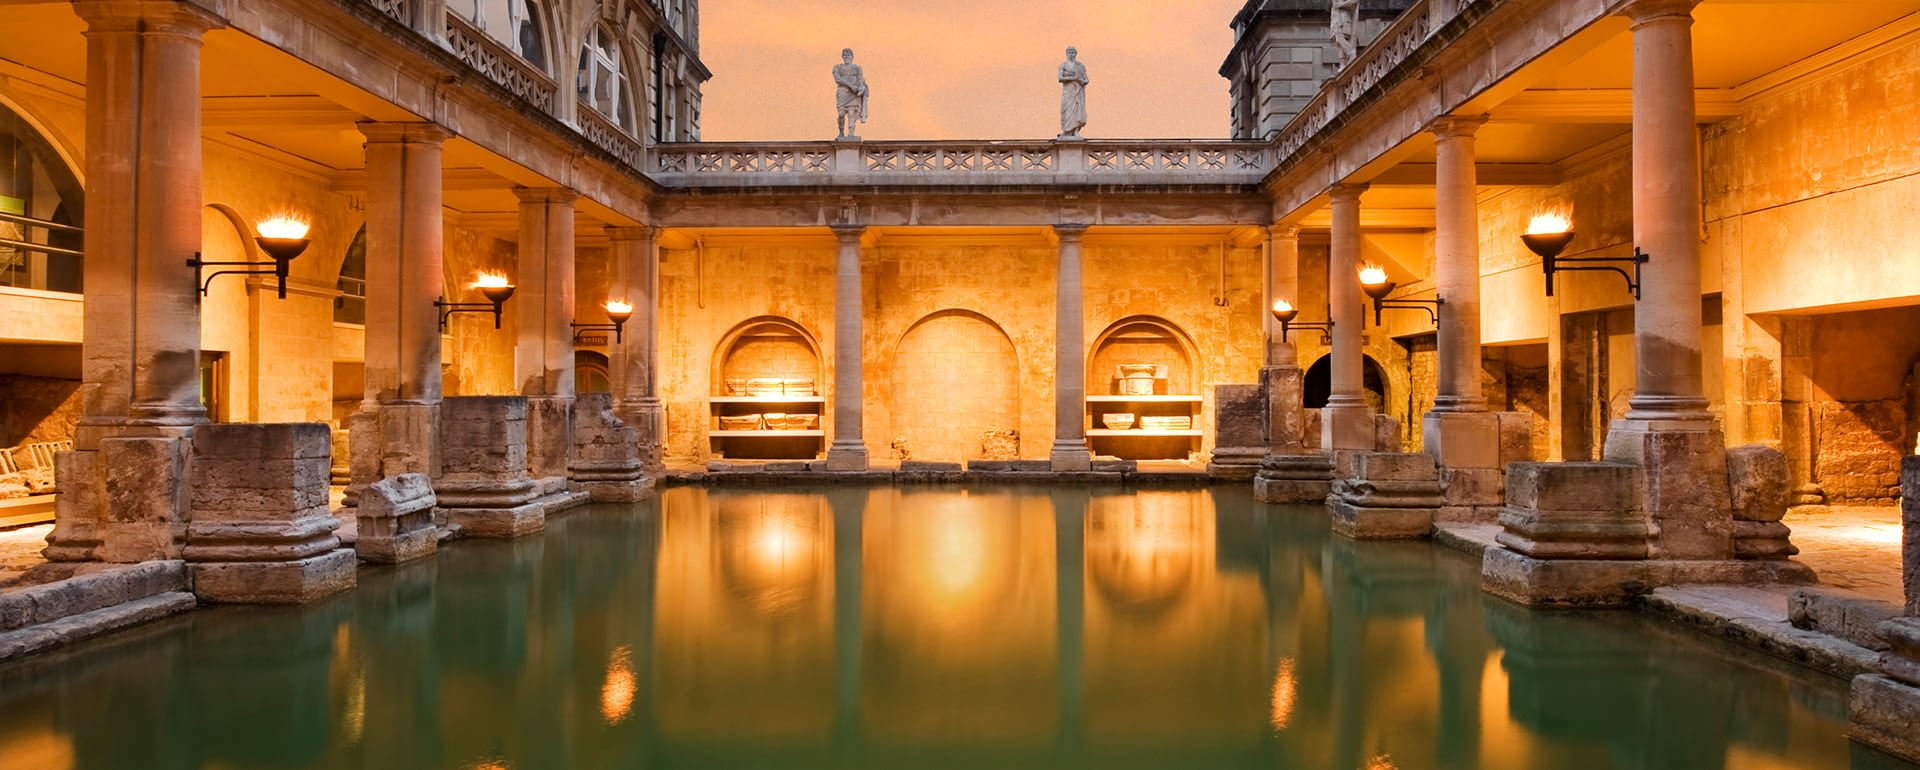 Roman Baths and Pump Room